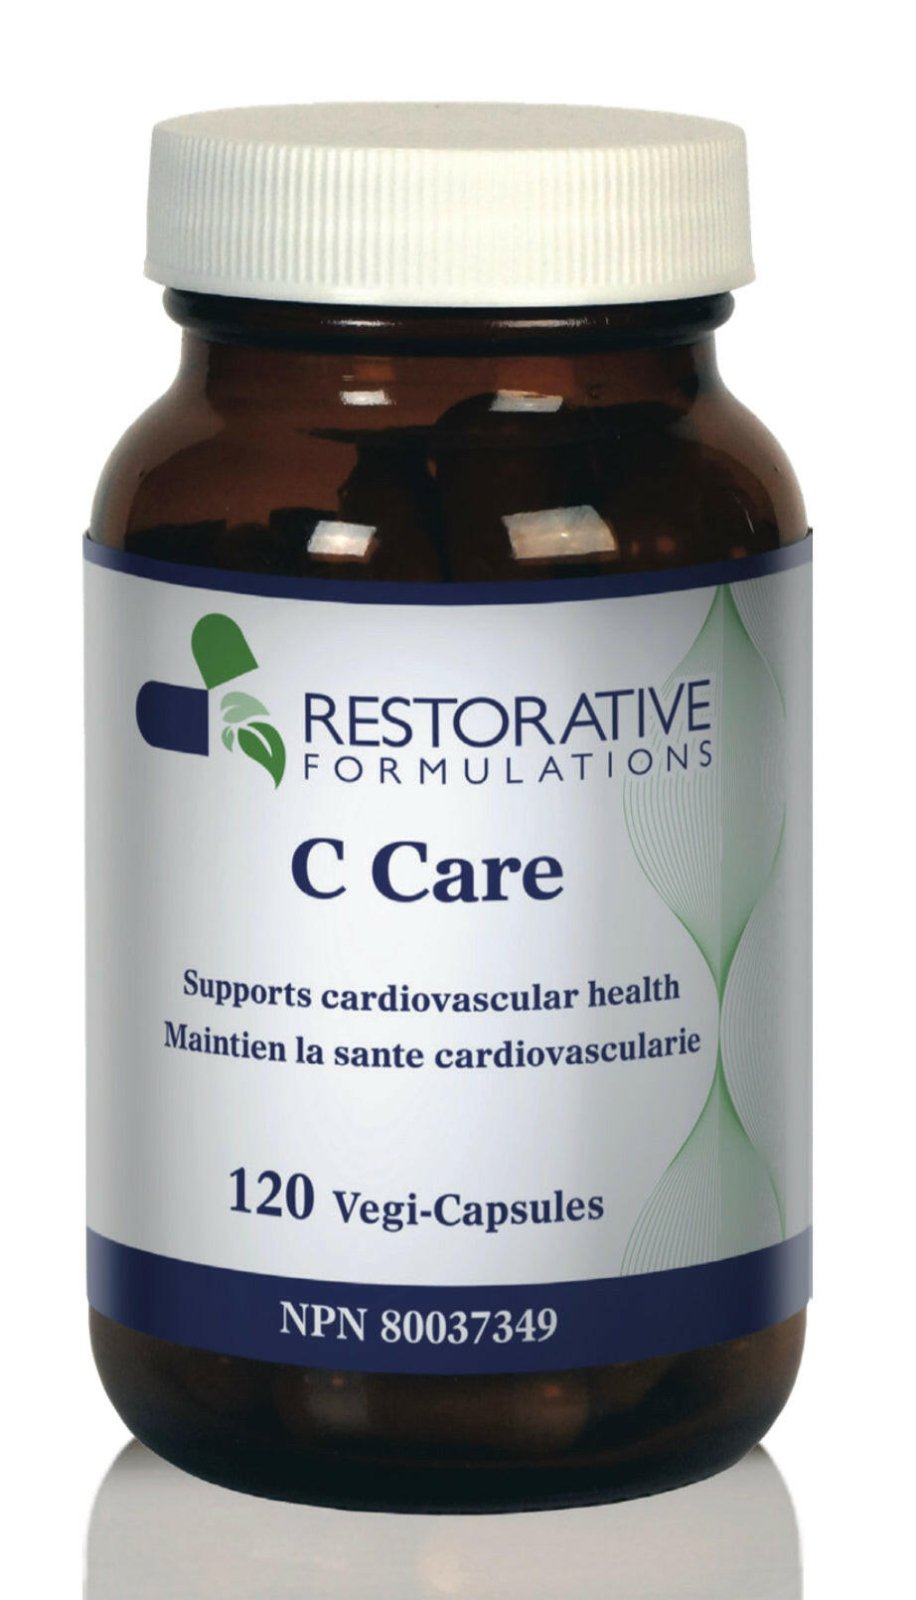 Restorative formulations Cholesterol Care / C - Care (120 caps)